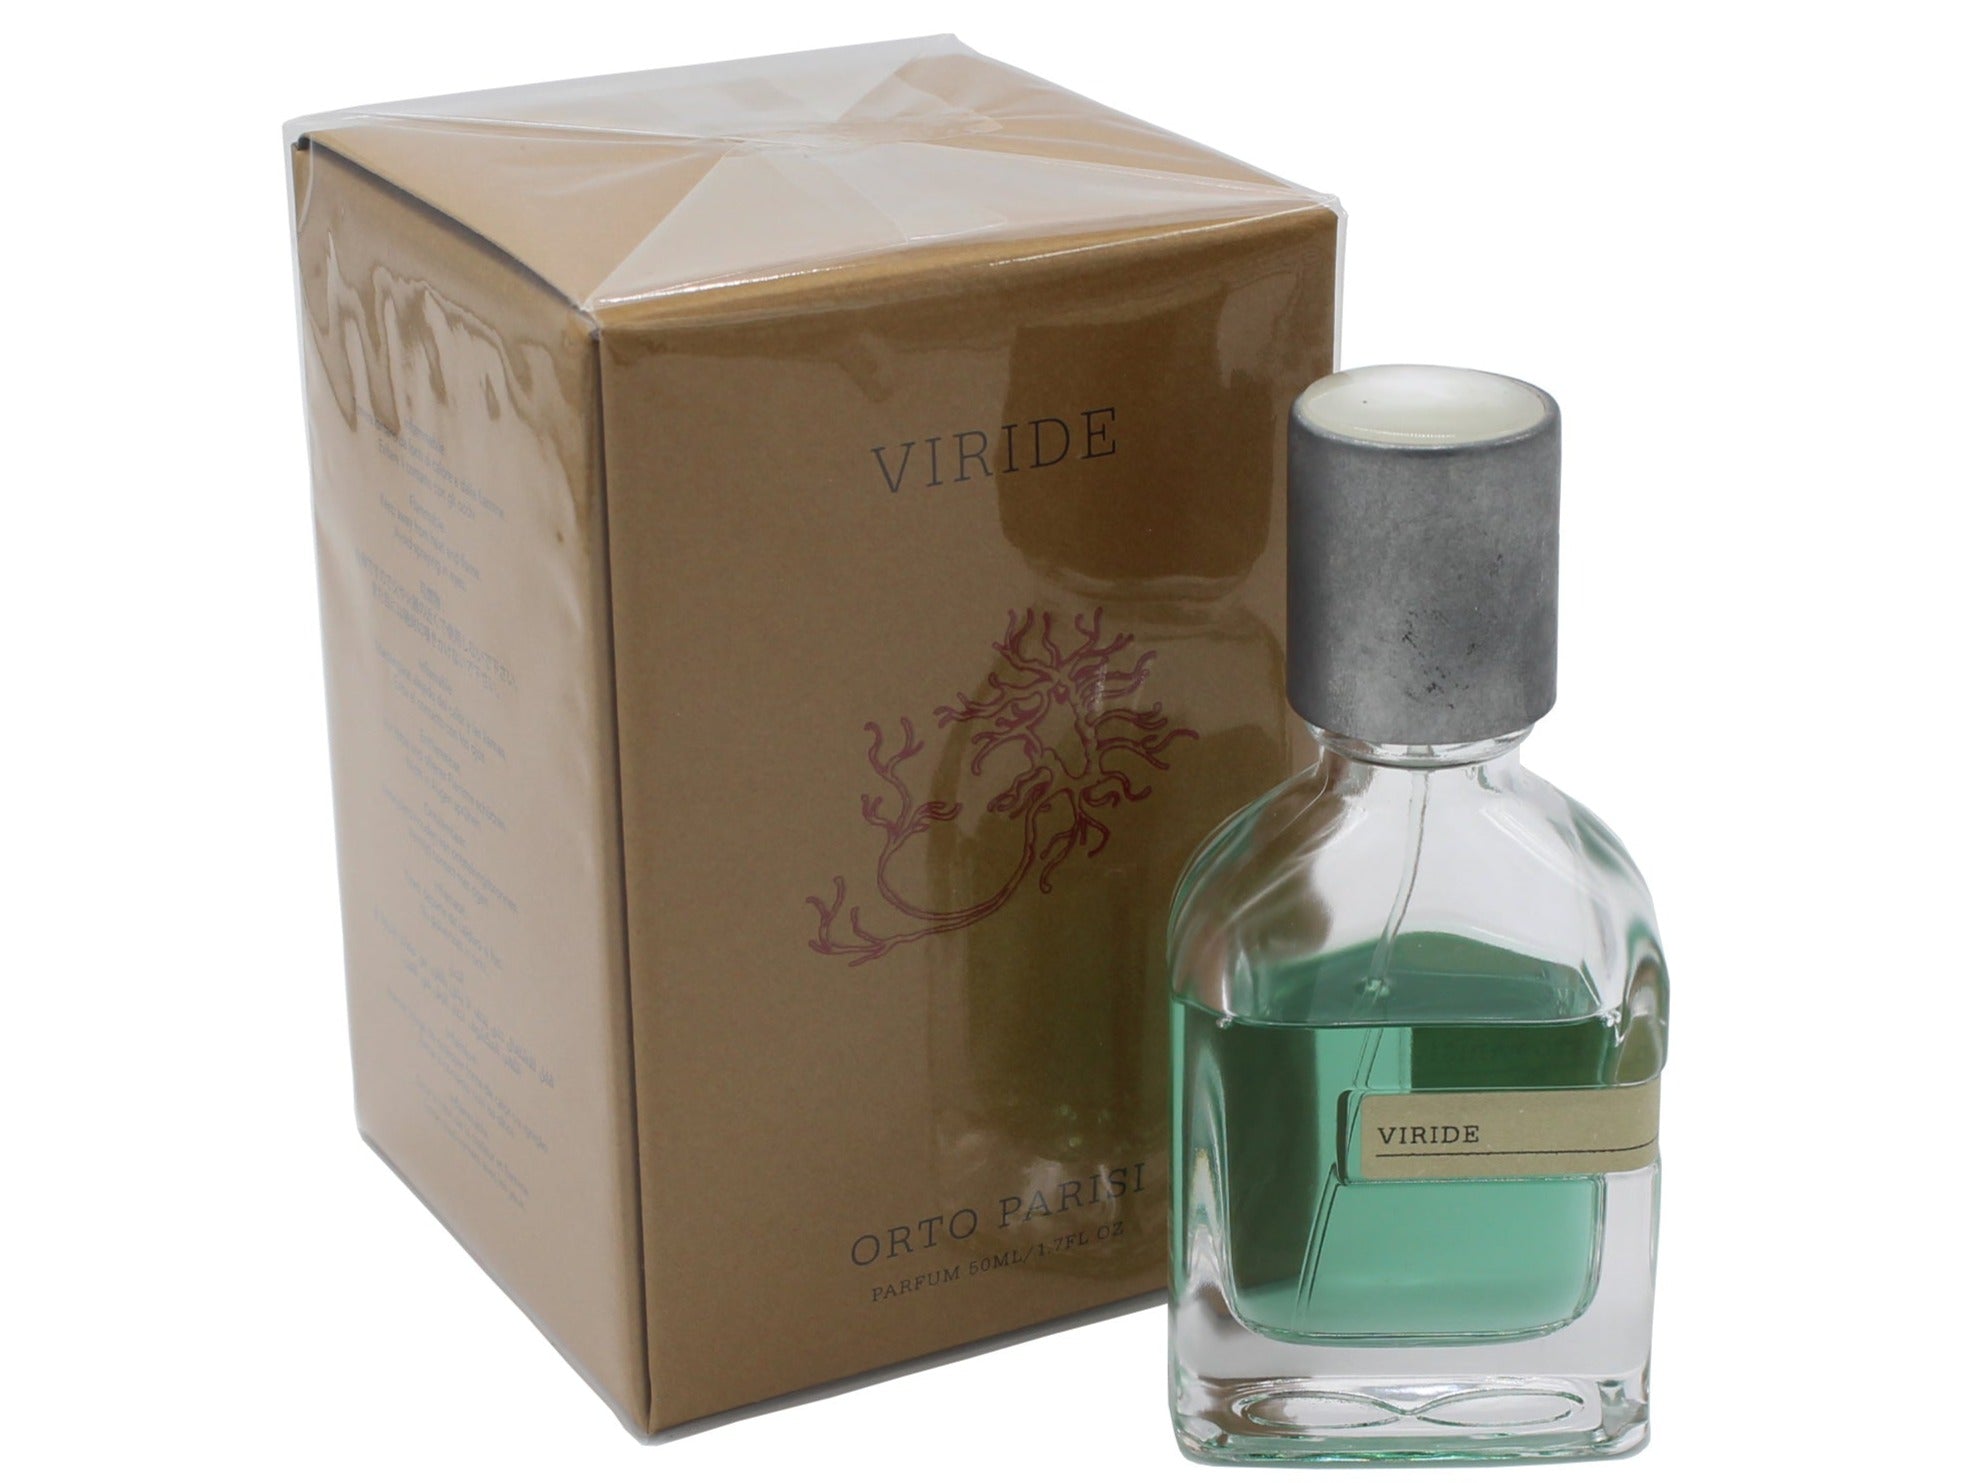 Viride perfume